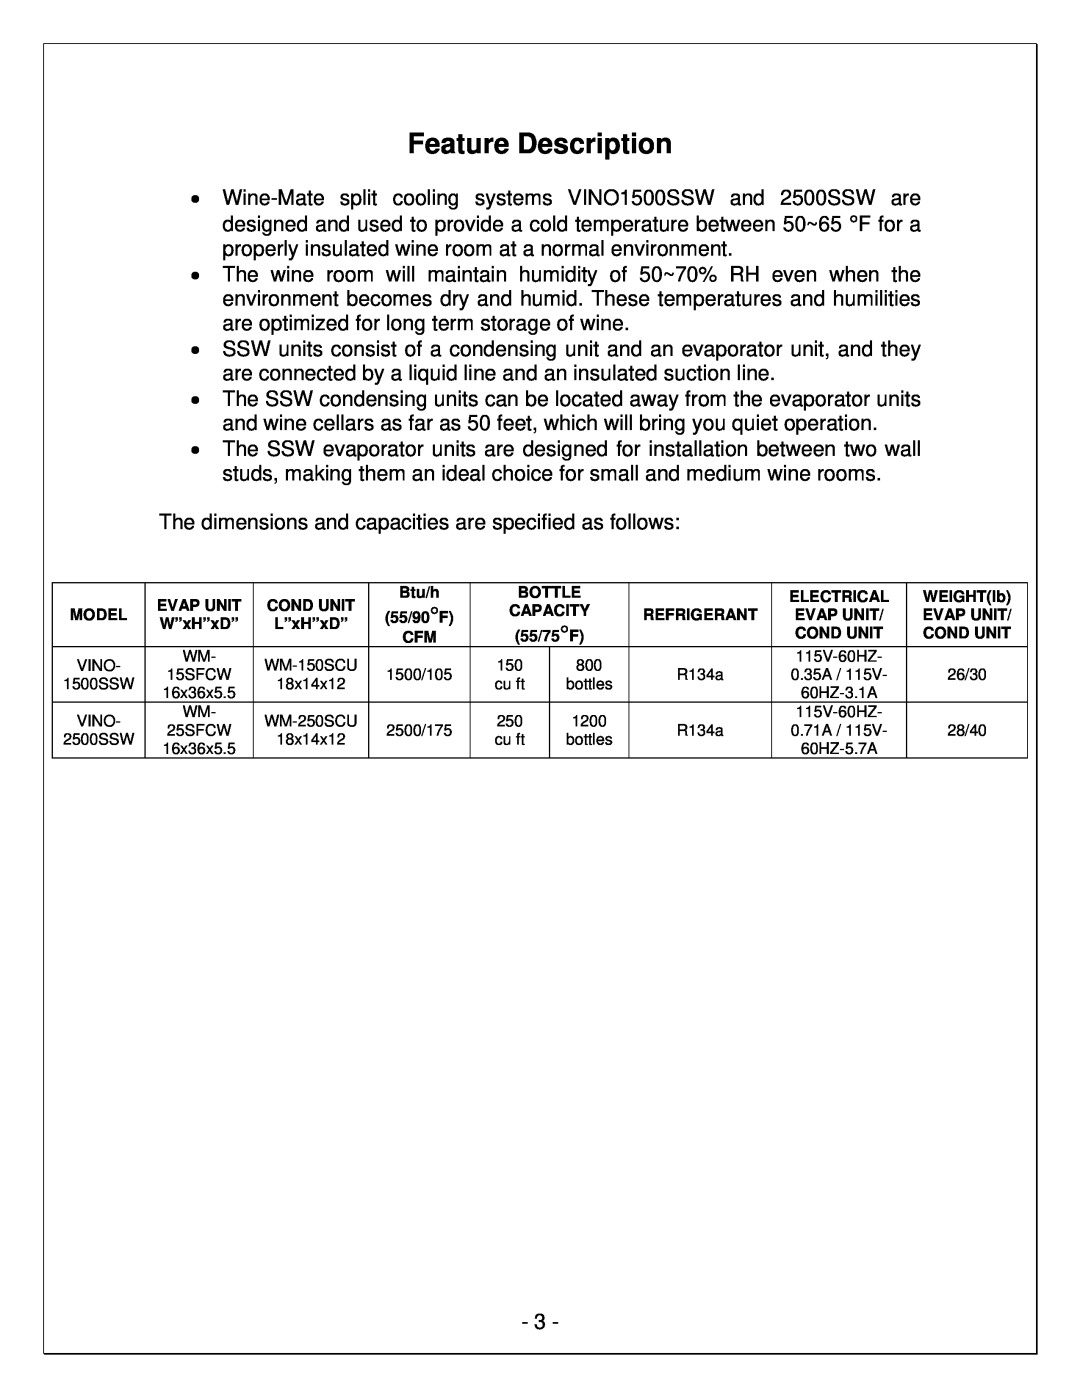 Vinotemp WM-25SFCW, WM-15SFCW, VINO-2500SSW, VINO-1500SSW manual Feature Description 